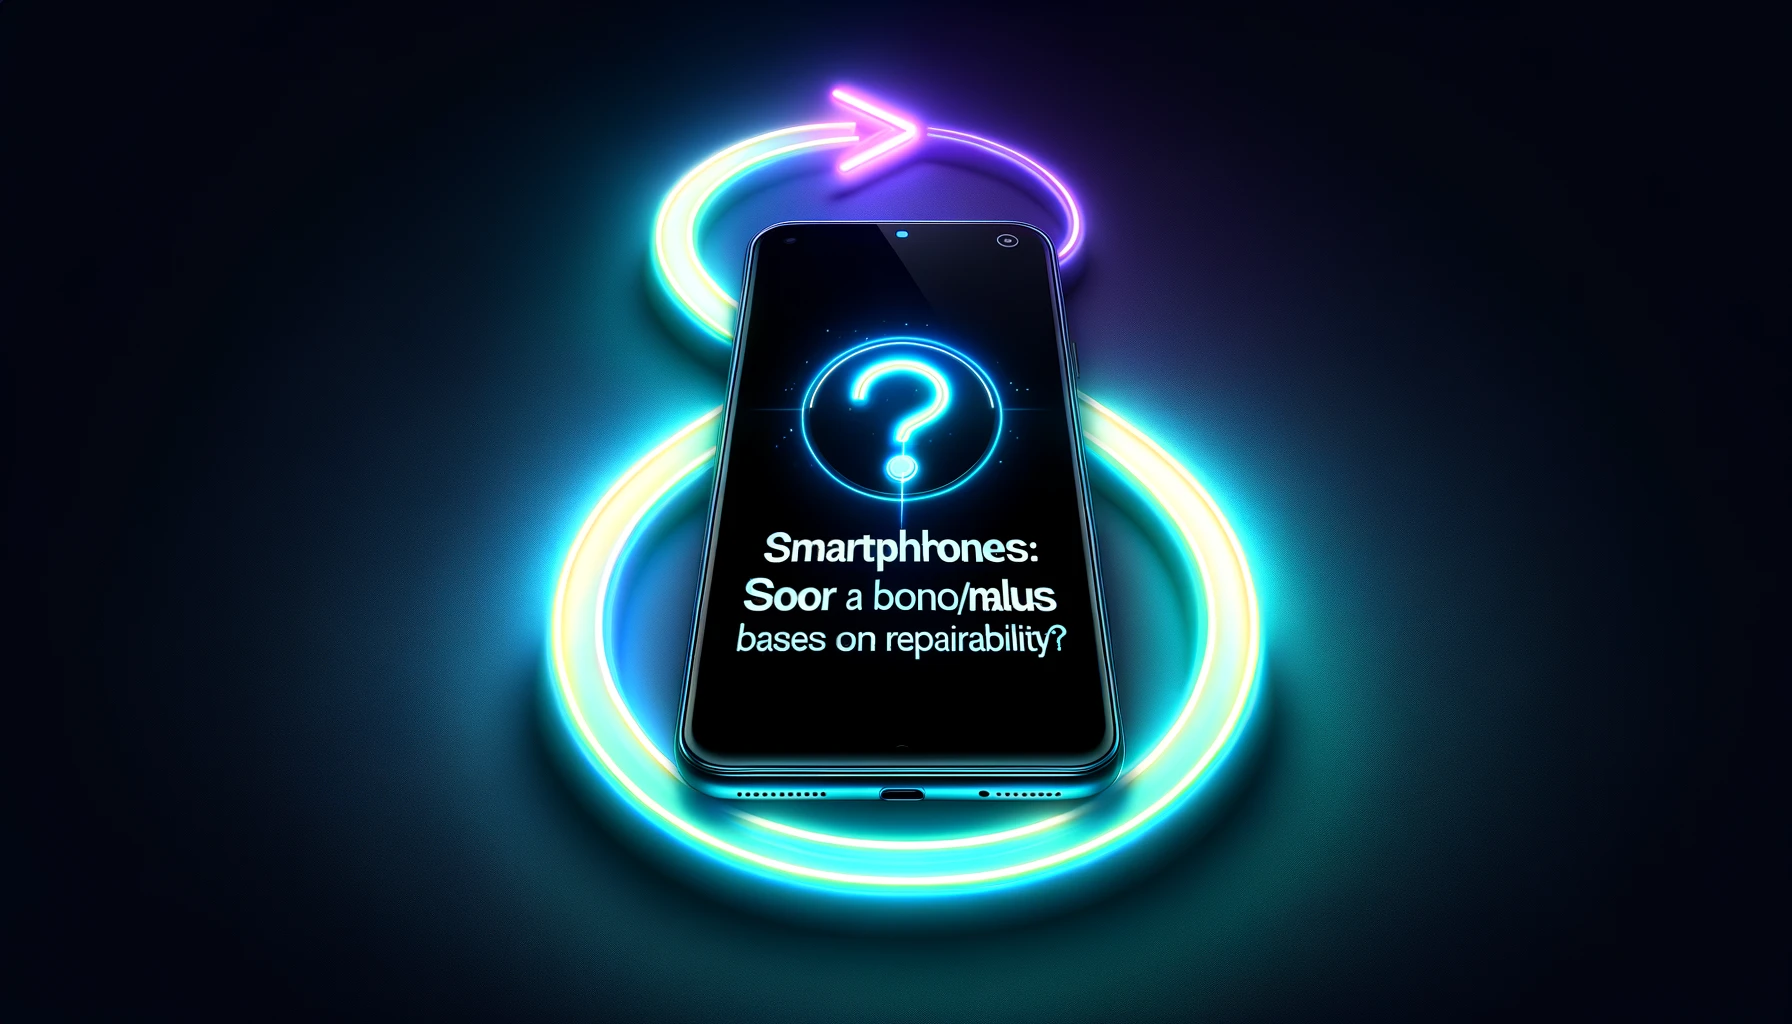 smartphones bientot un bonus malus selon la reparabilite